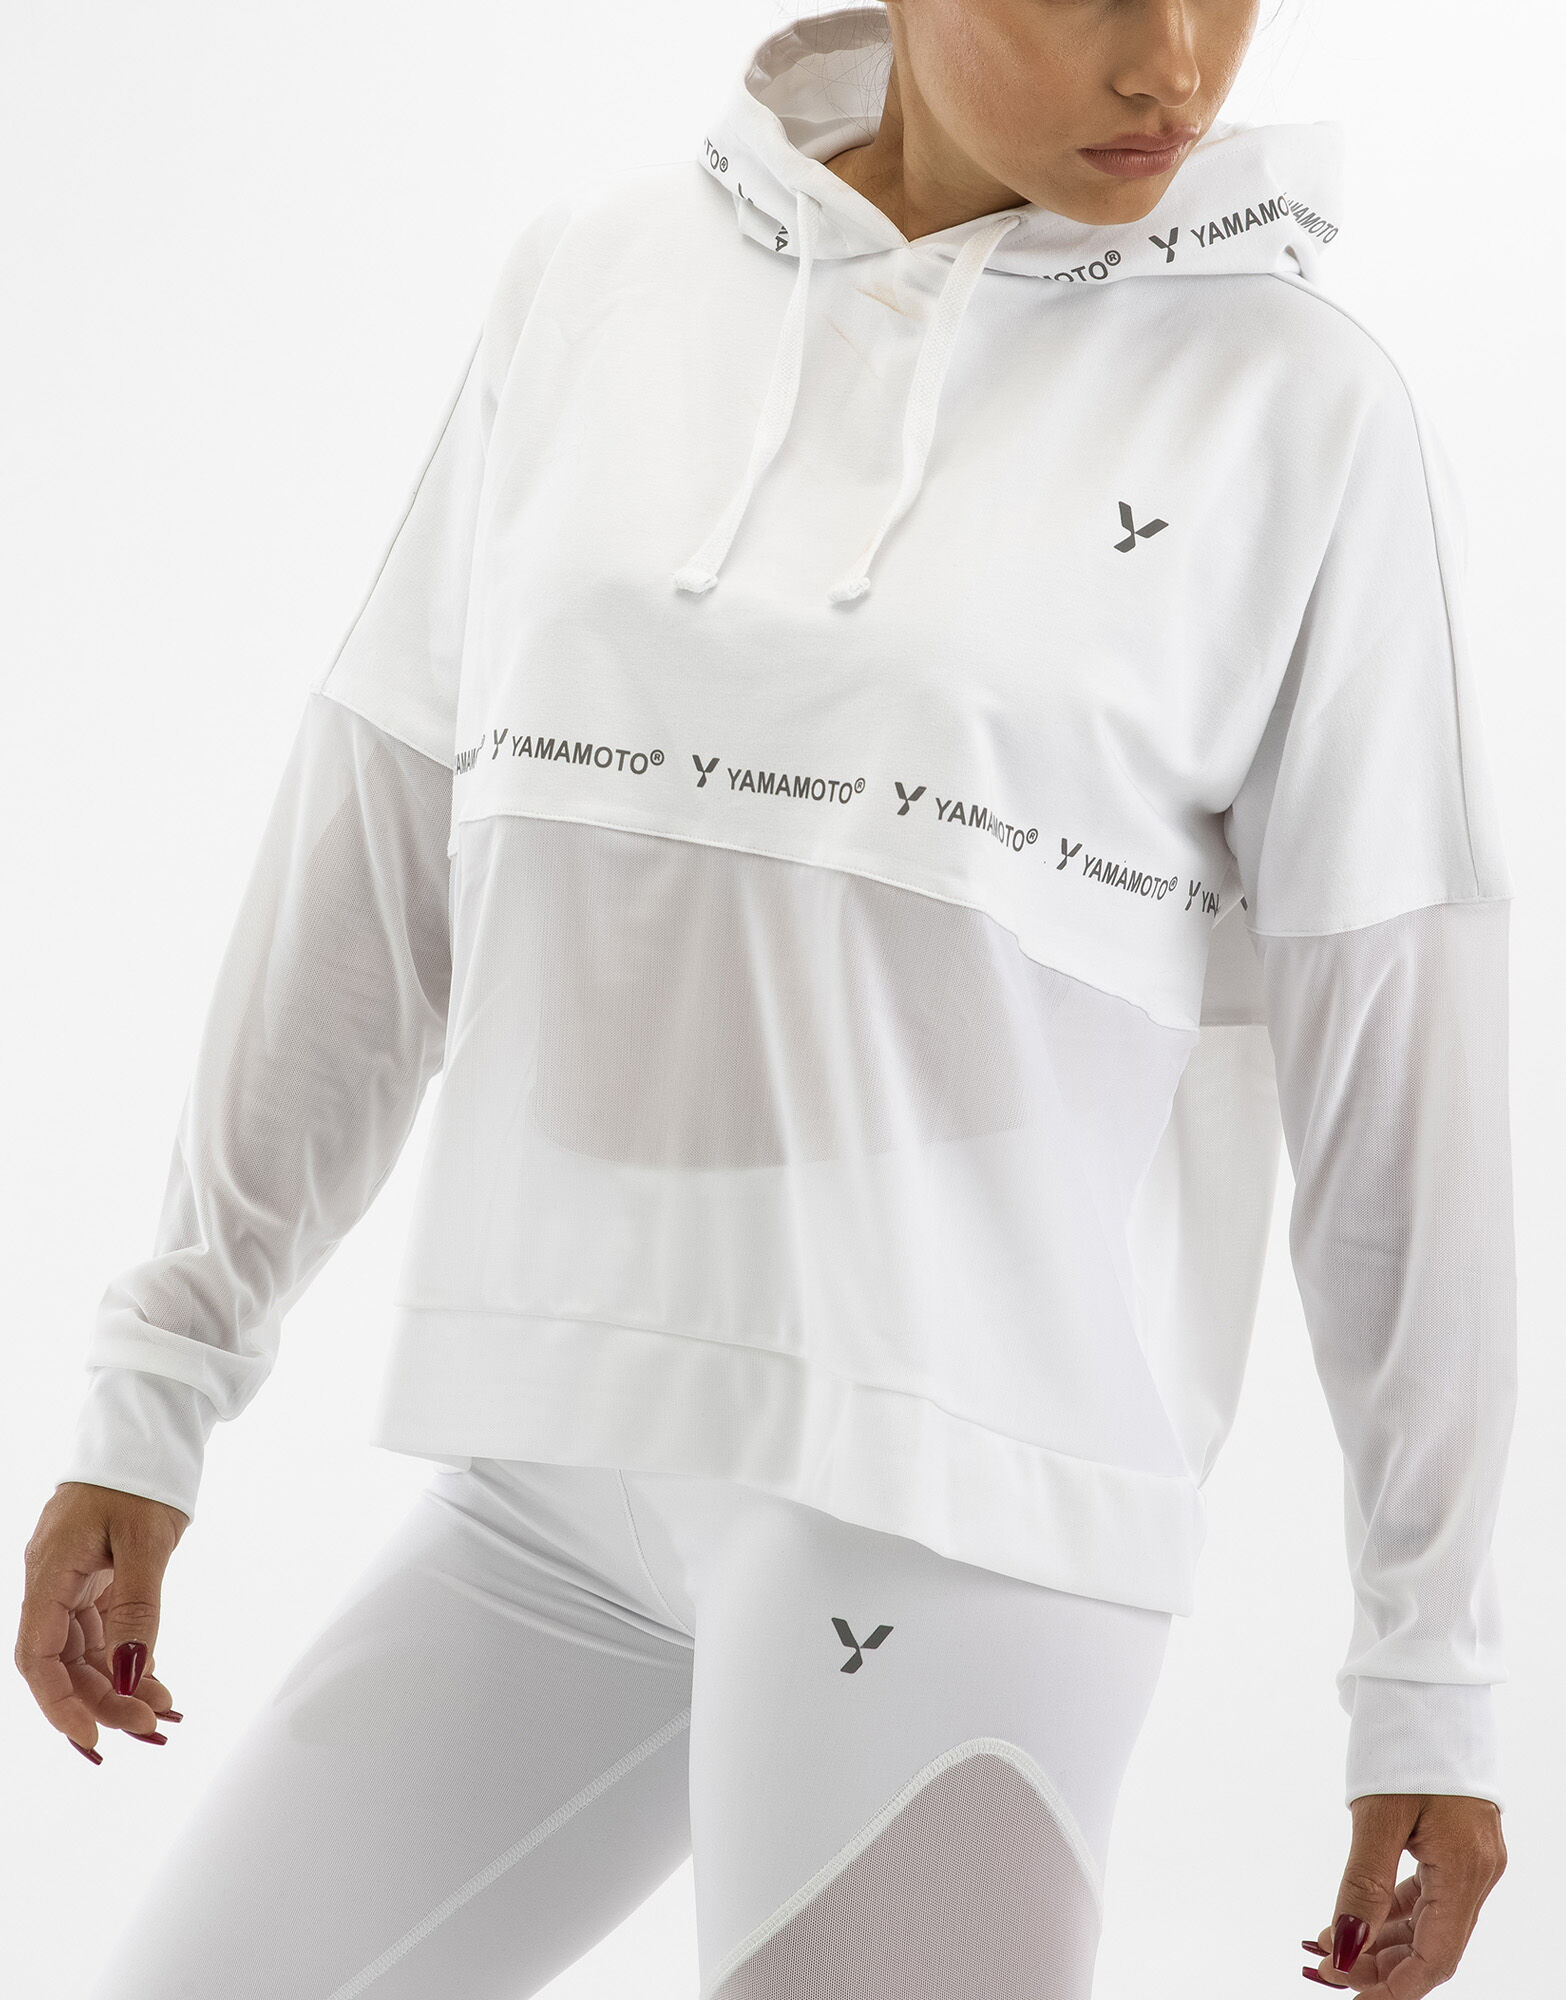 YAMAMOTO OUTFIT Lady Sweatshirt Colore: Bianco/bianco S